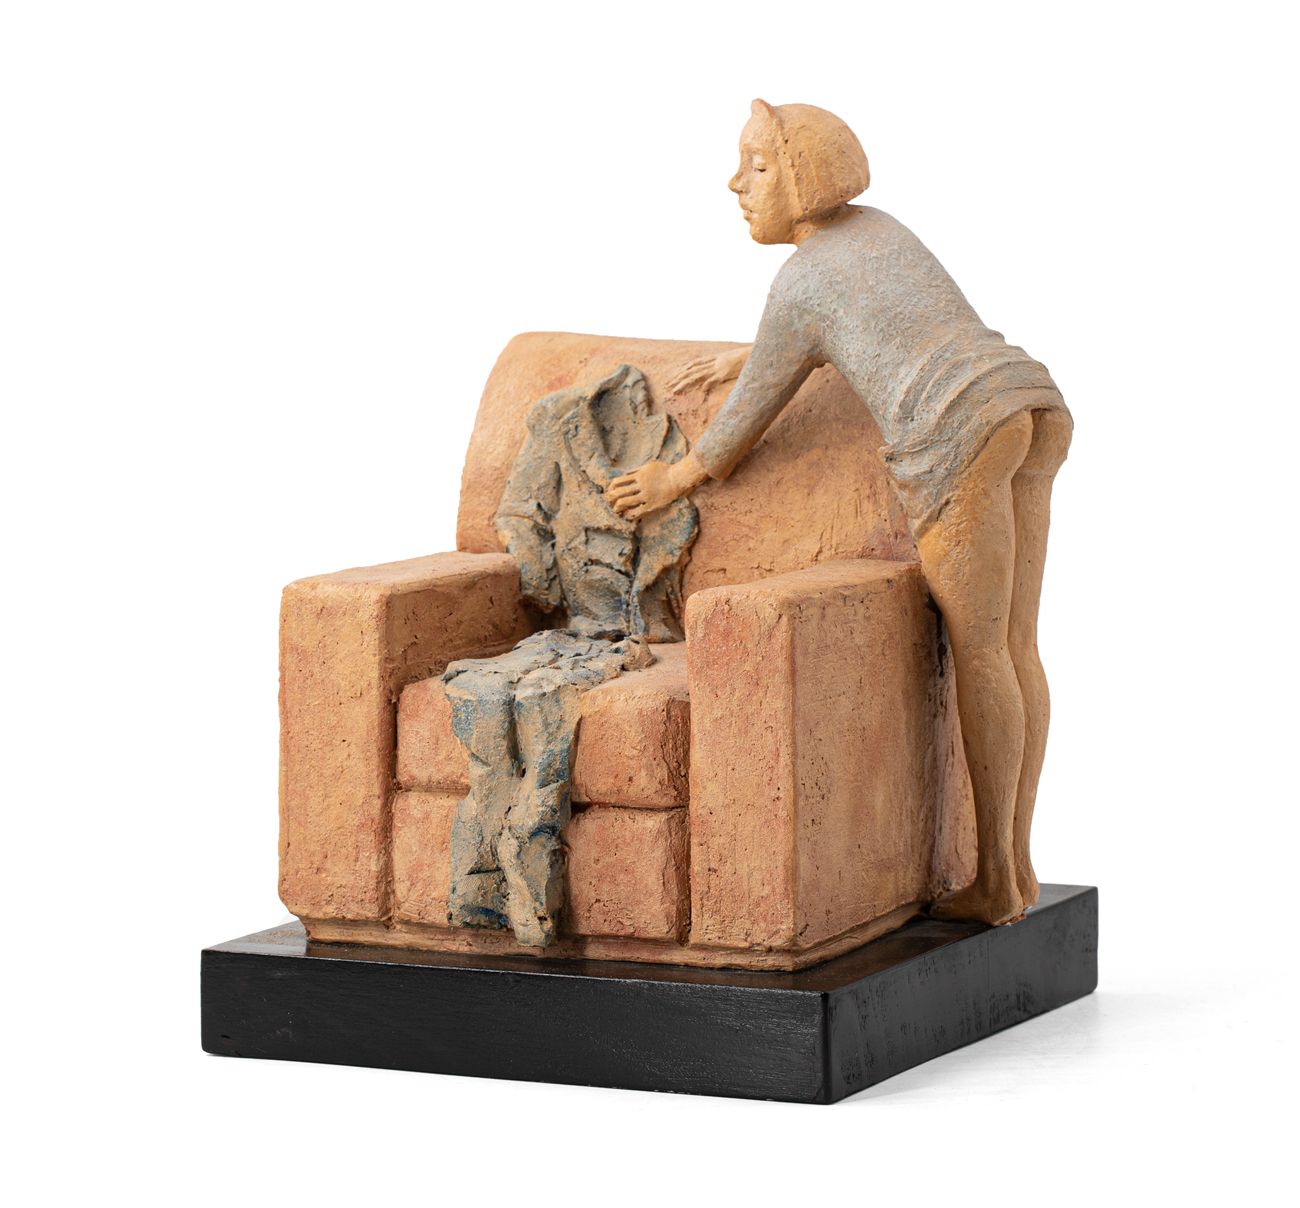 MASSIMO BERTOLINI (1962) - Senza Titolo Terrakotta-Skulptur

cm 30x21x23